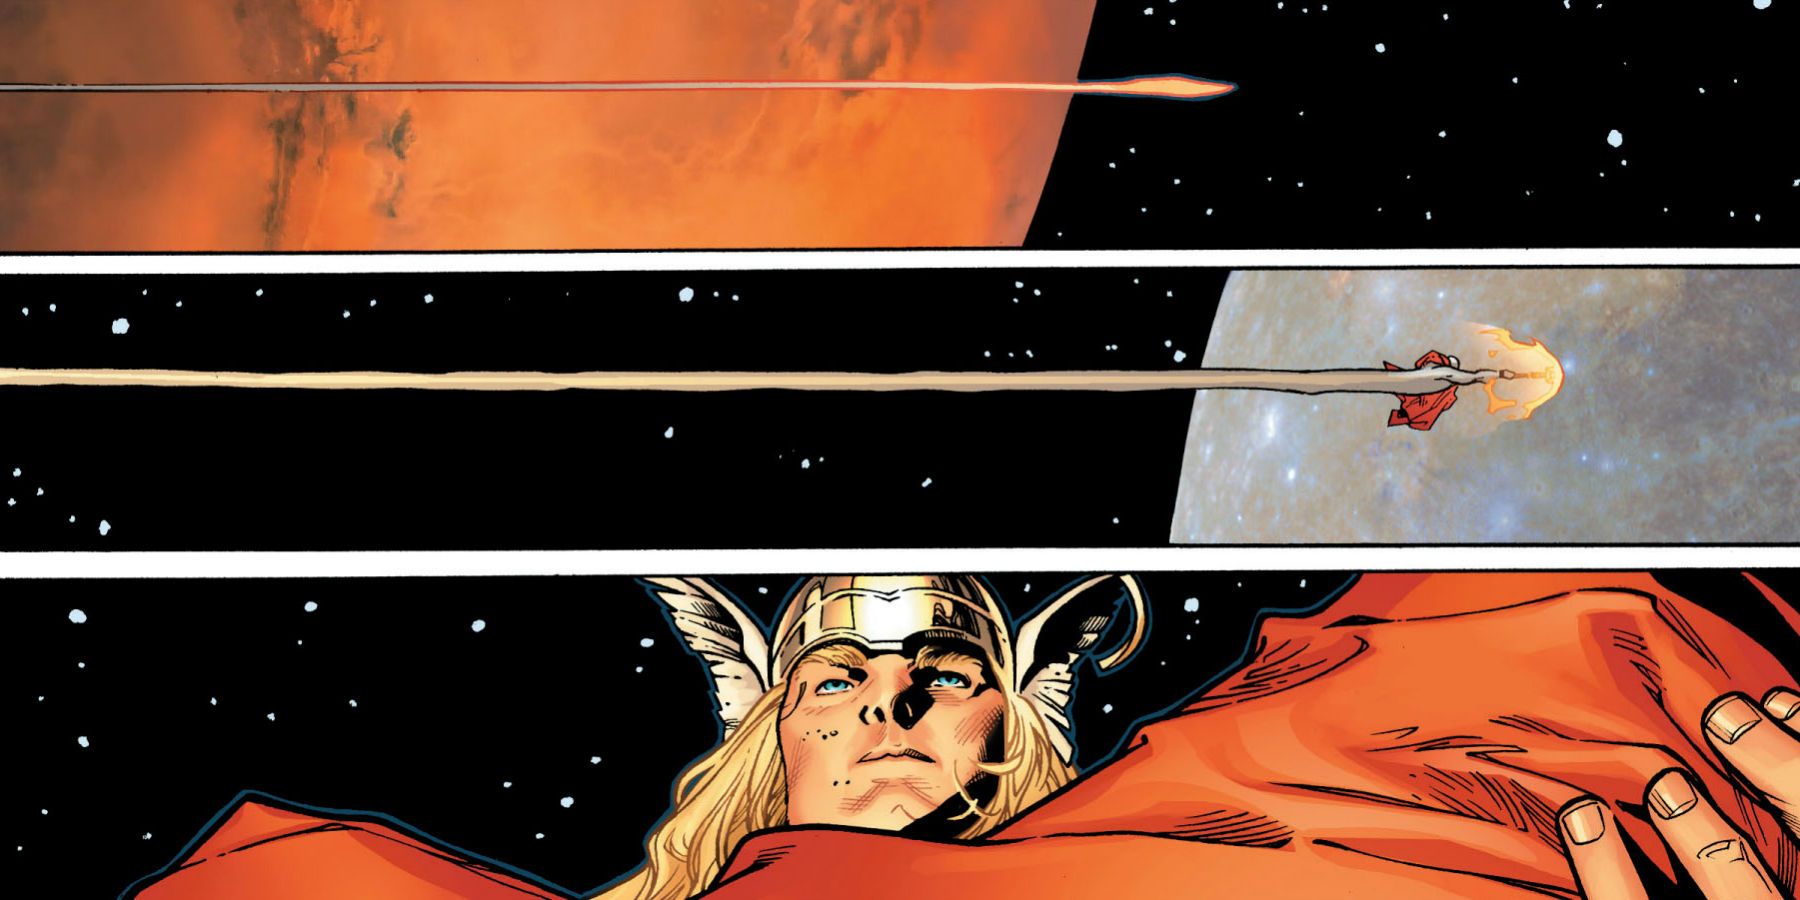 Thor flies towards Sun using superhuman speed